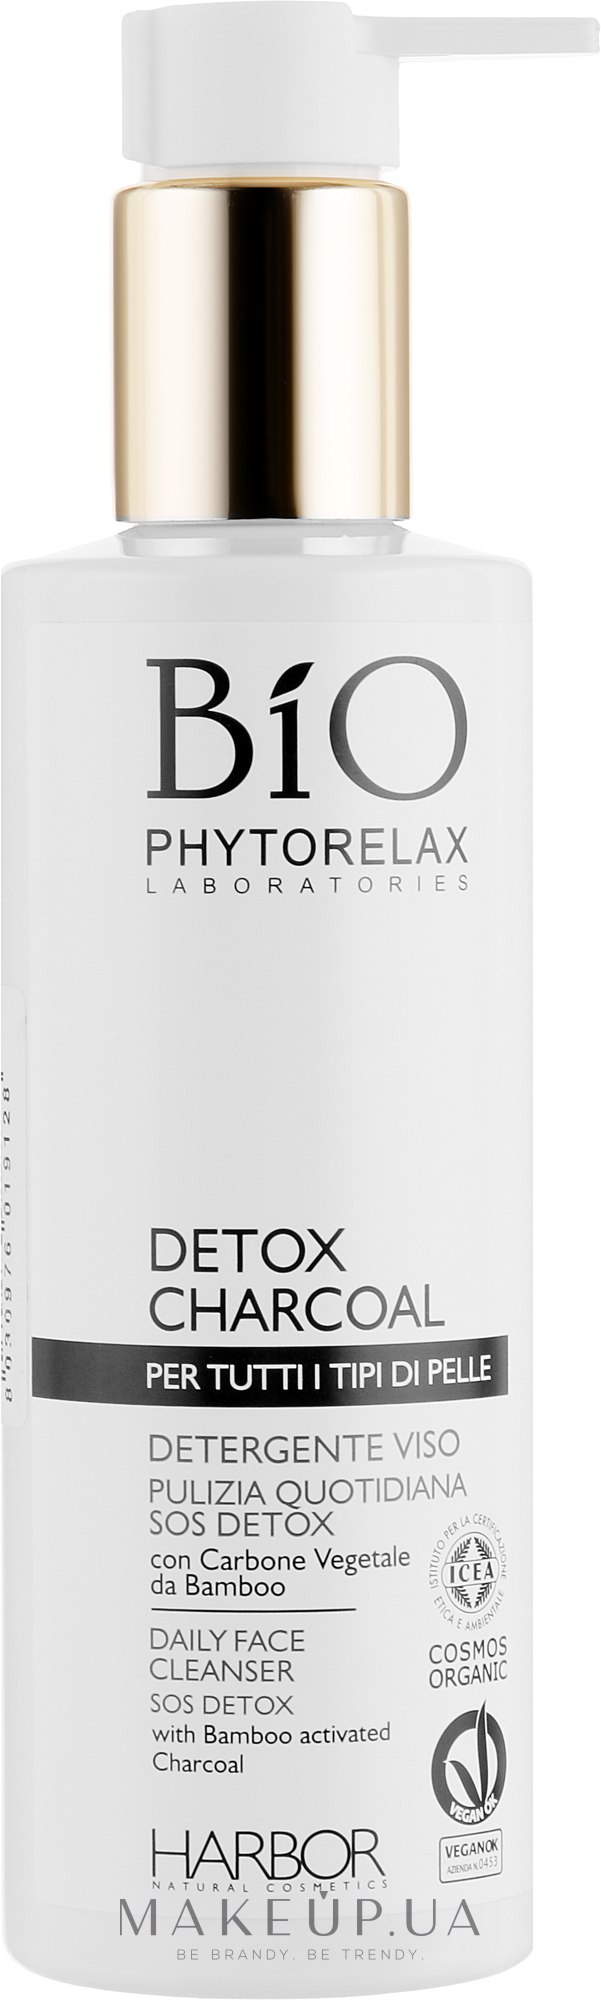 Гель для обличчя - Phytorelax Laboratories Bio Phytorelax Detox Charcoal Daily Face Cleanser Sos Detox — фото 200ml